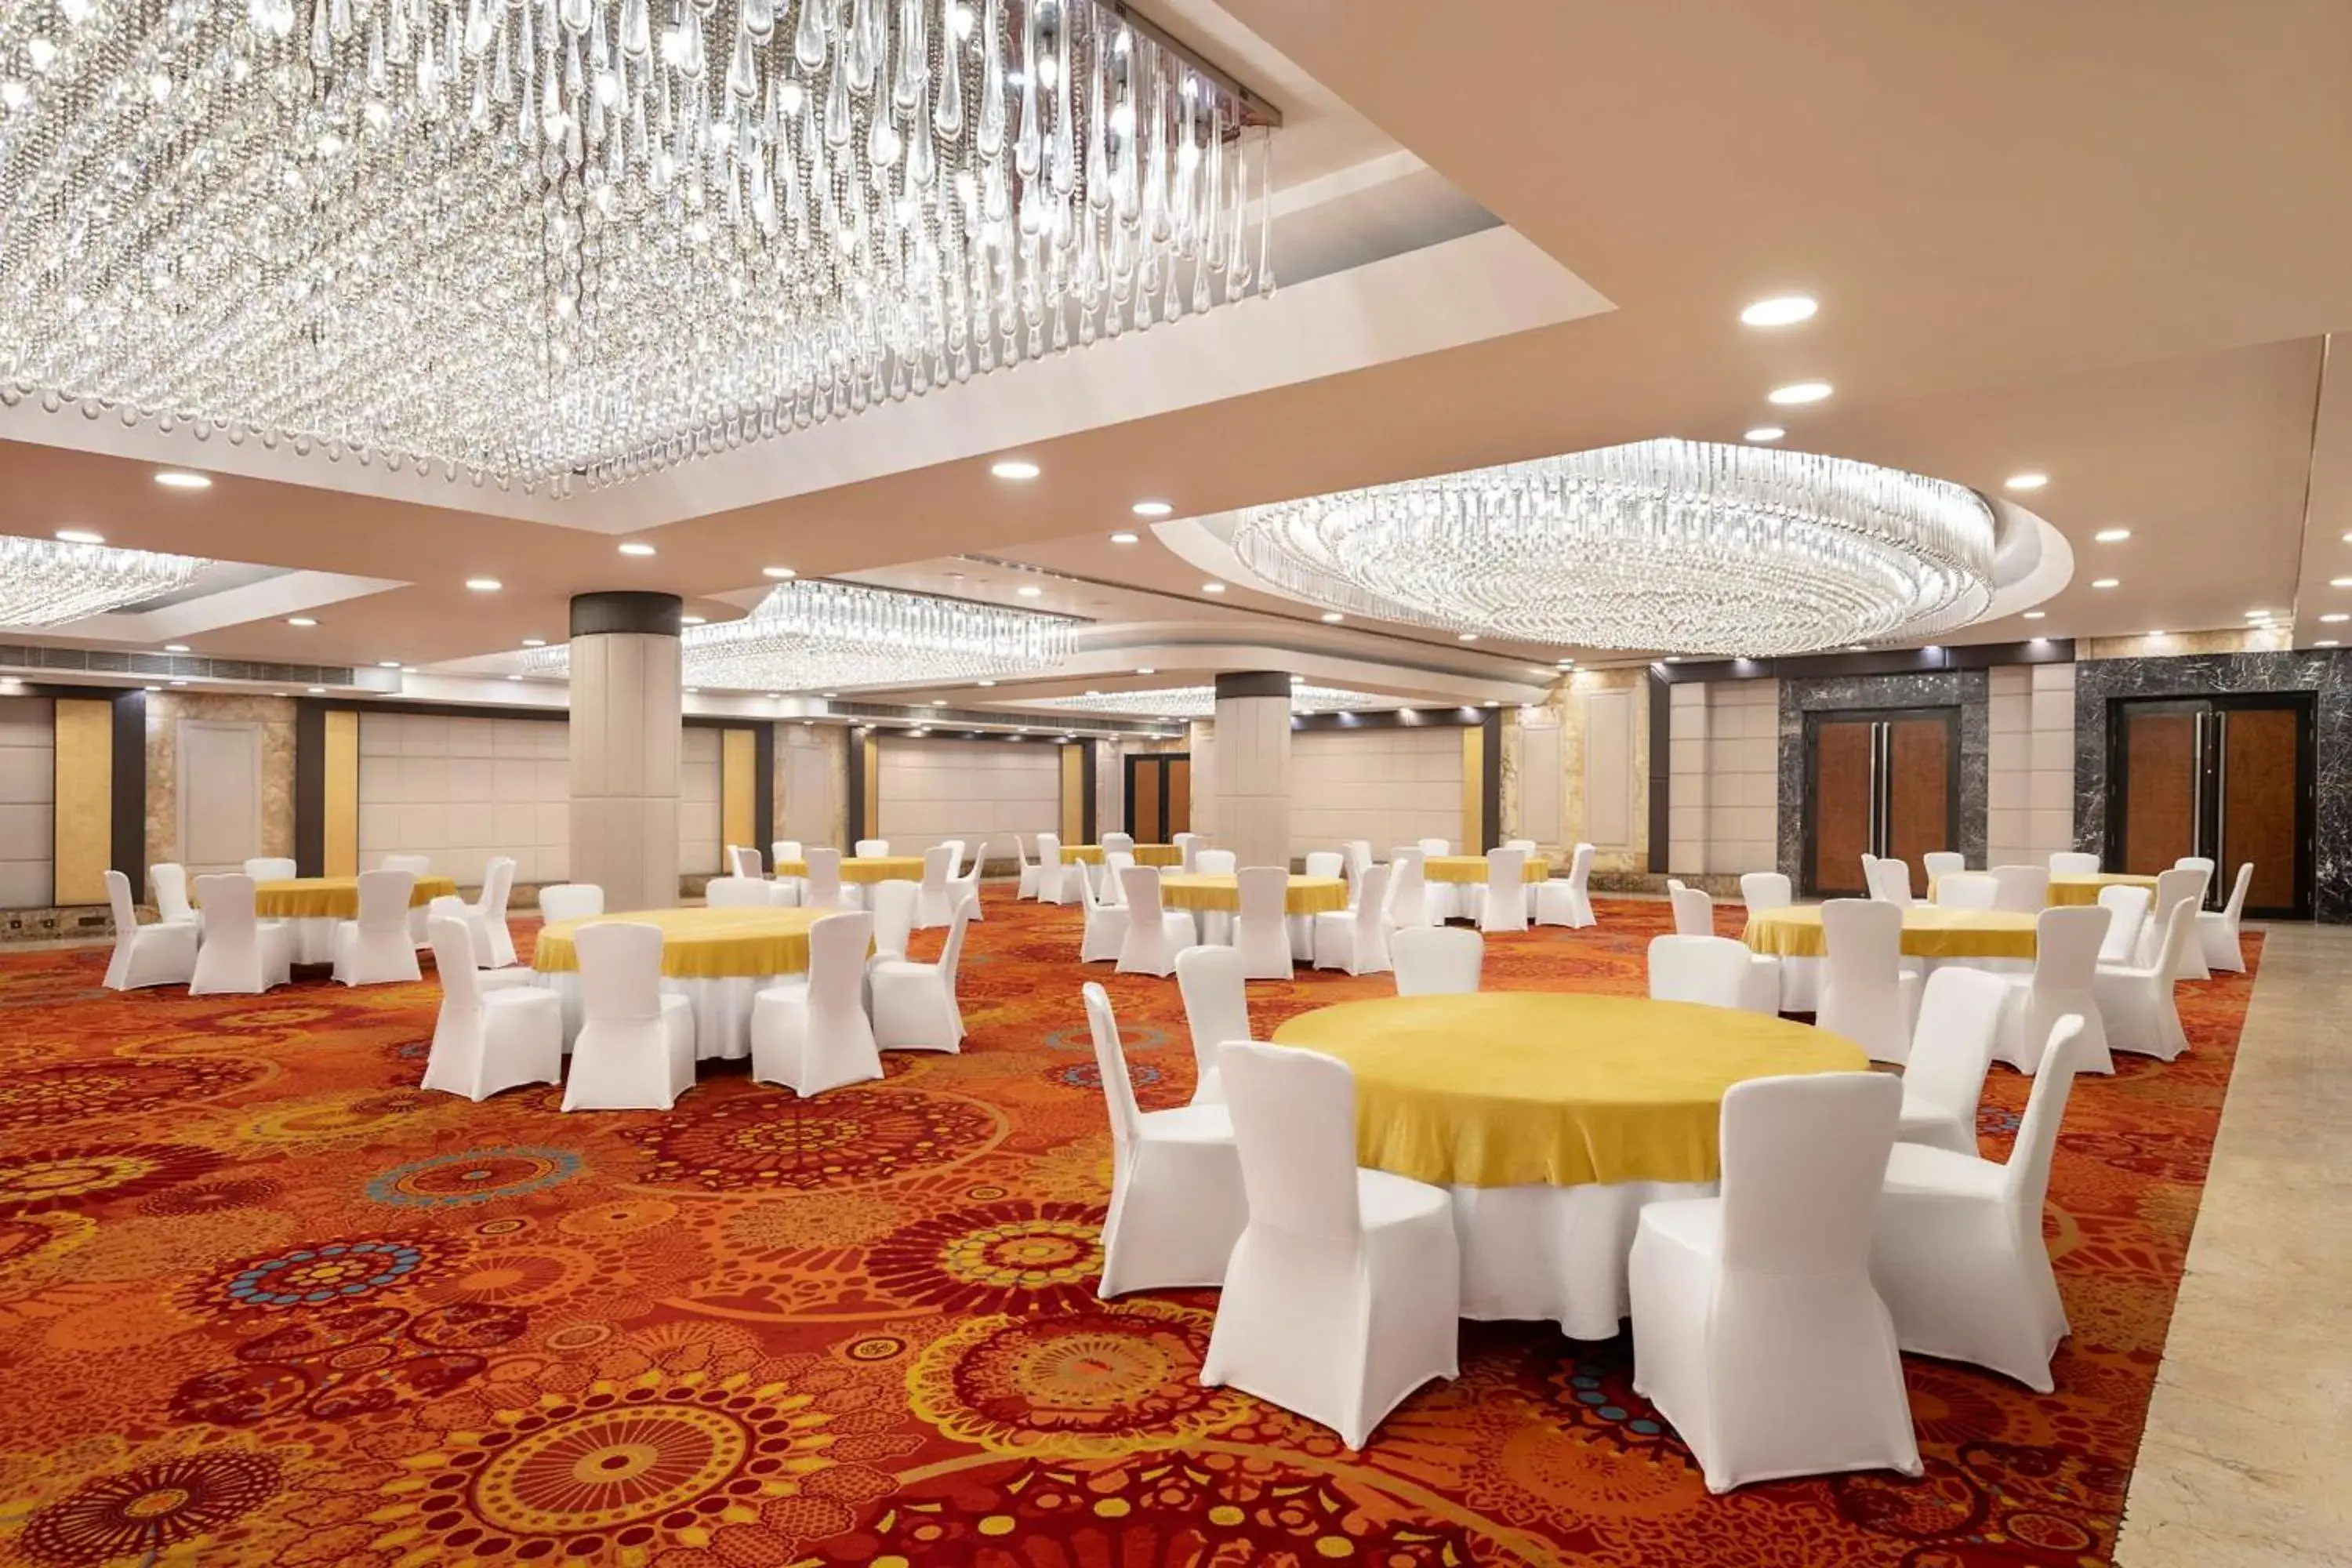 Banquet/Function facilities, Banquet Facilities in Radisson Blu Kaushambi Delhi NCR